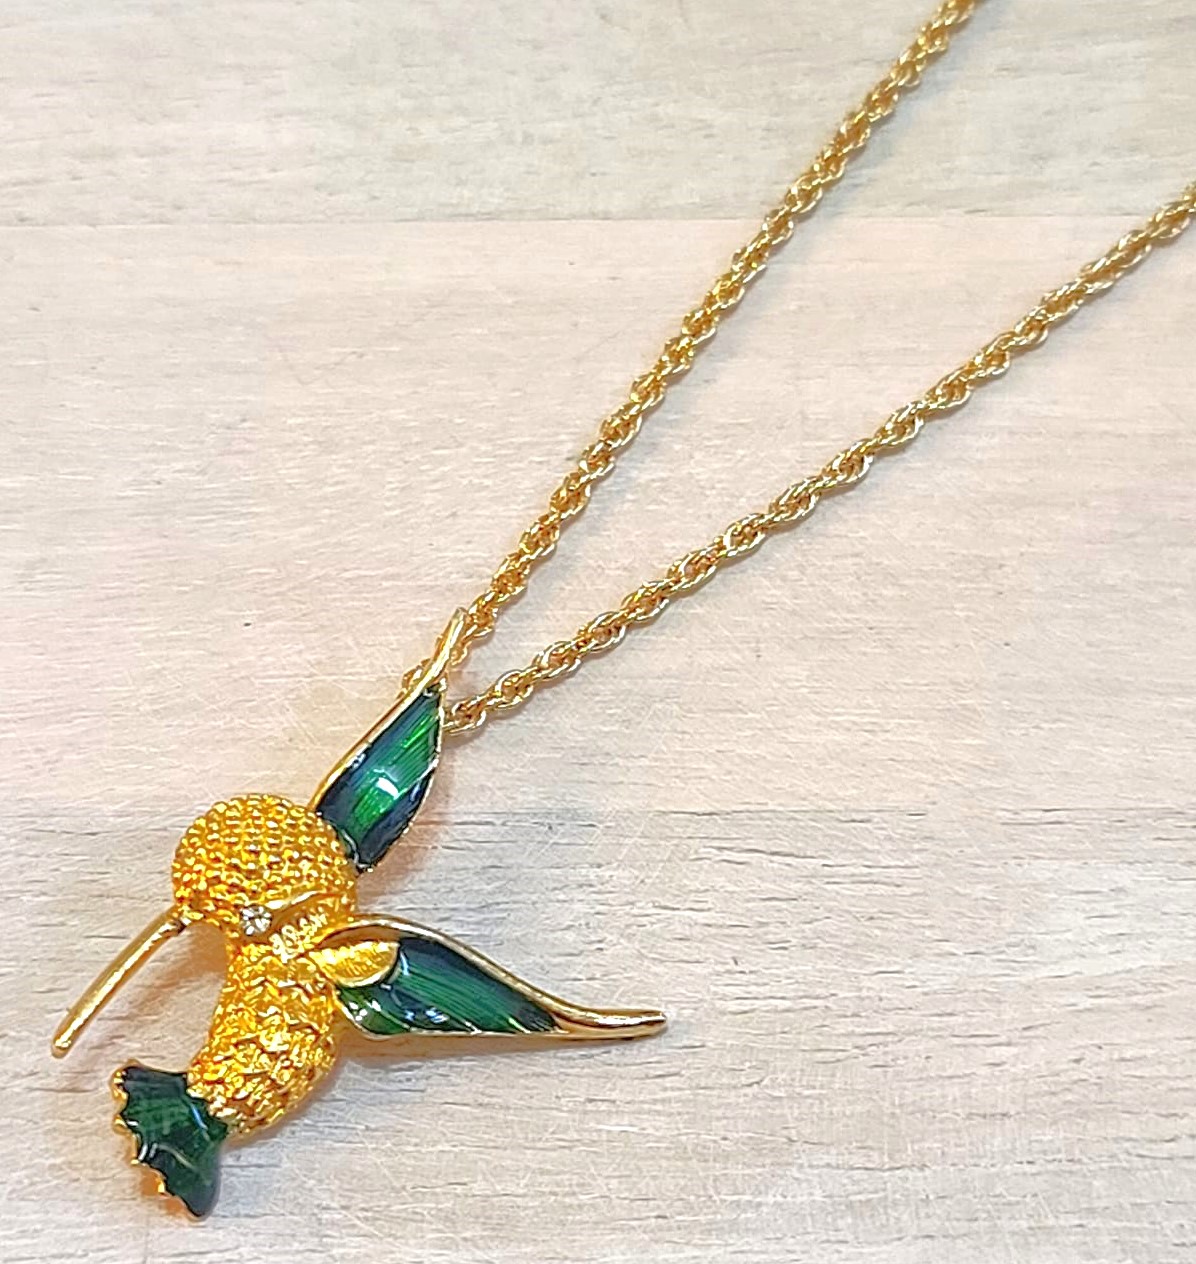 Hummingbird pendant necklace with chain, vintage enamel hummingbird